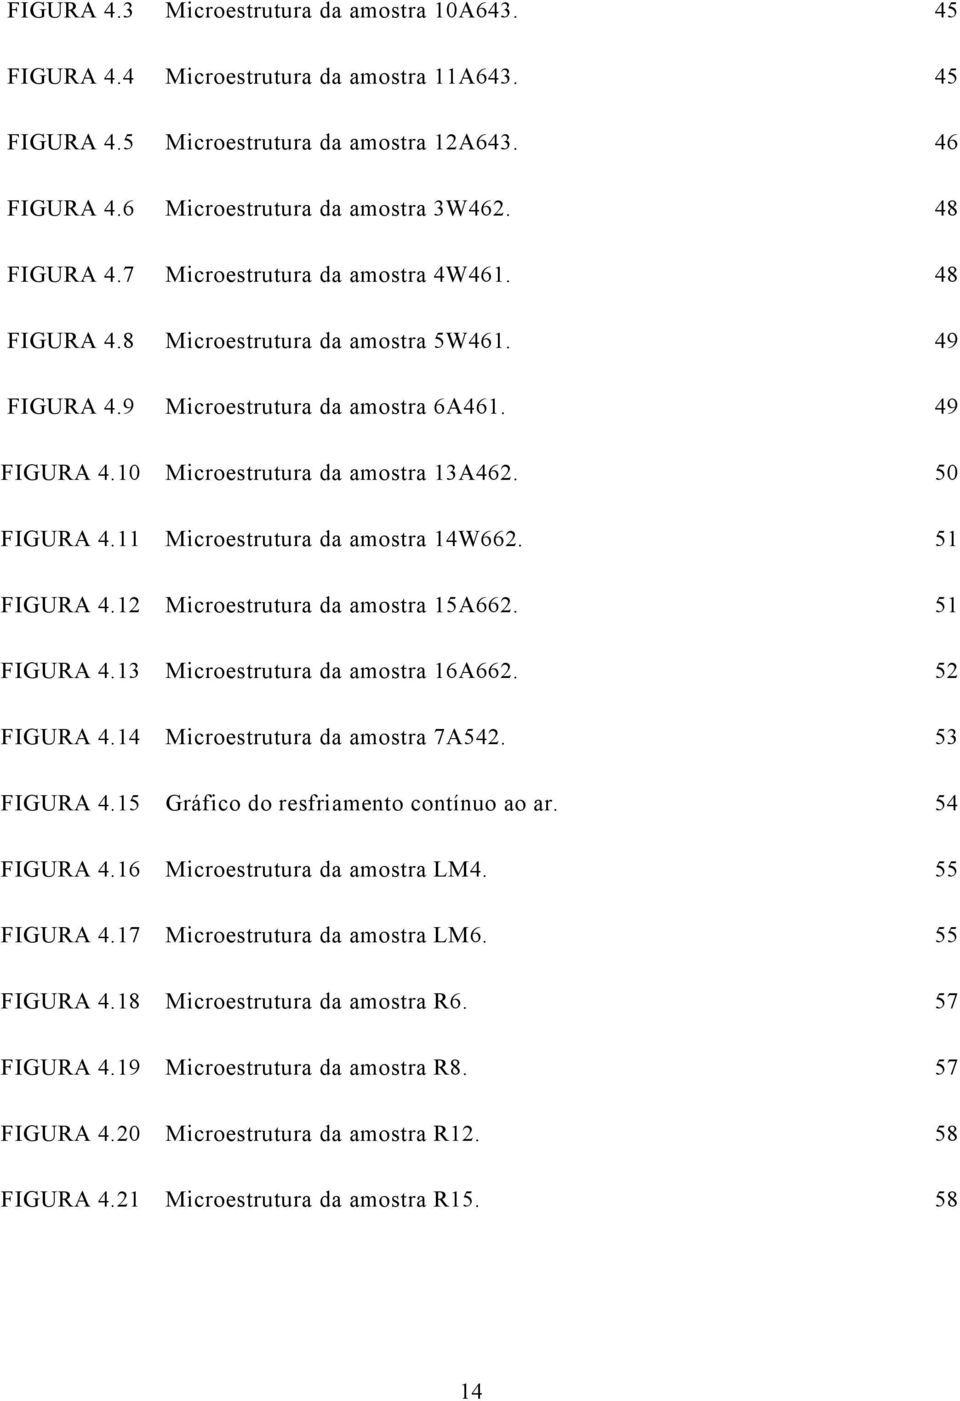 11 Microestrutura da amostra 14W662. 51 FIGURA 4.12 Microestrutura da amostra 15A662. 51 FIGURA 4.13 Microestrutura da amostra 16A662. 52 FIGURA 4.14 Microestrutura da amostra 7A542. 53 FIGURA 4.